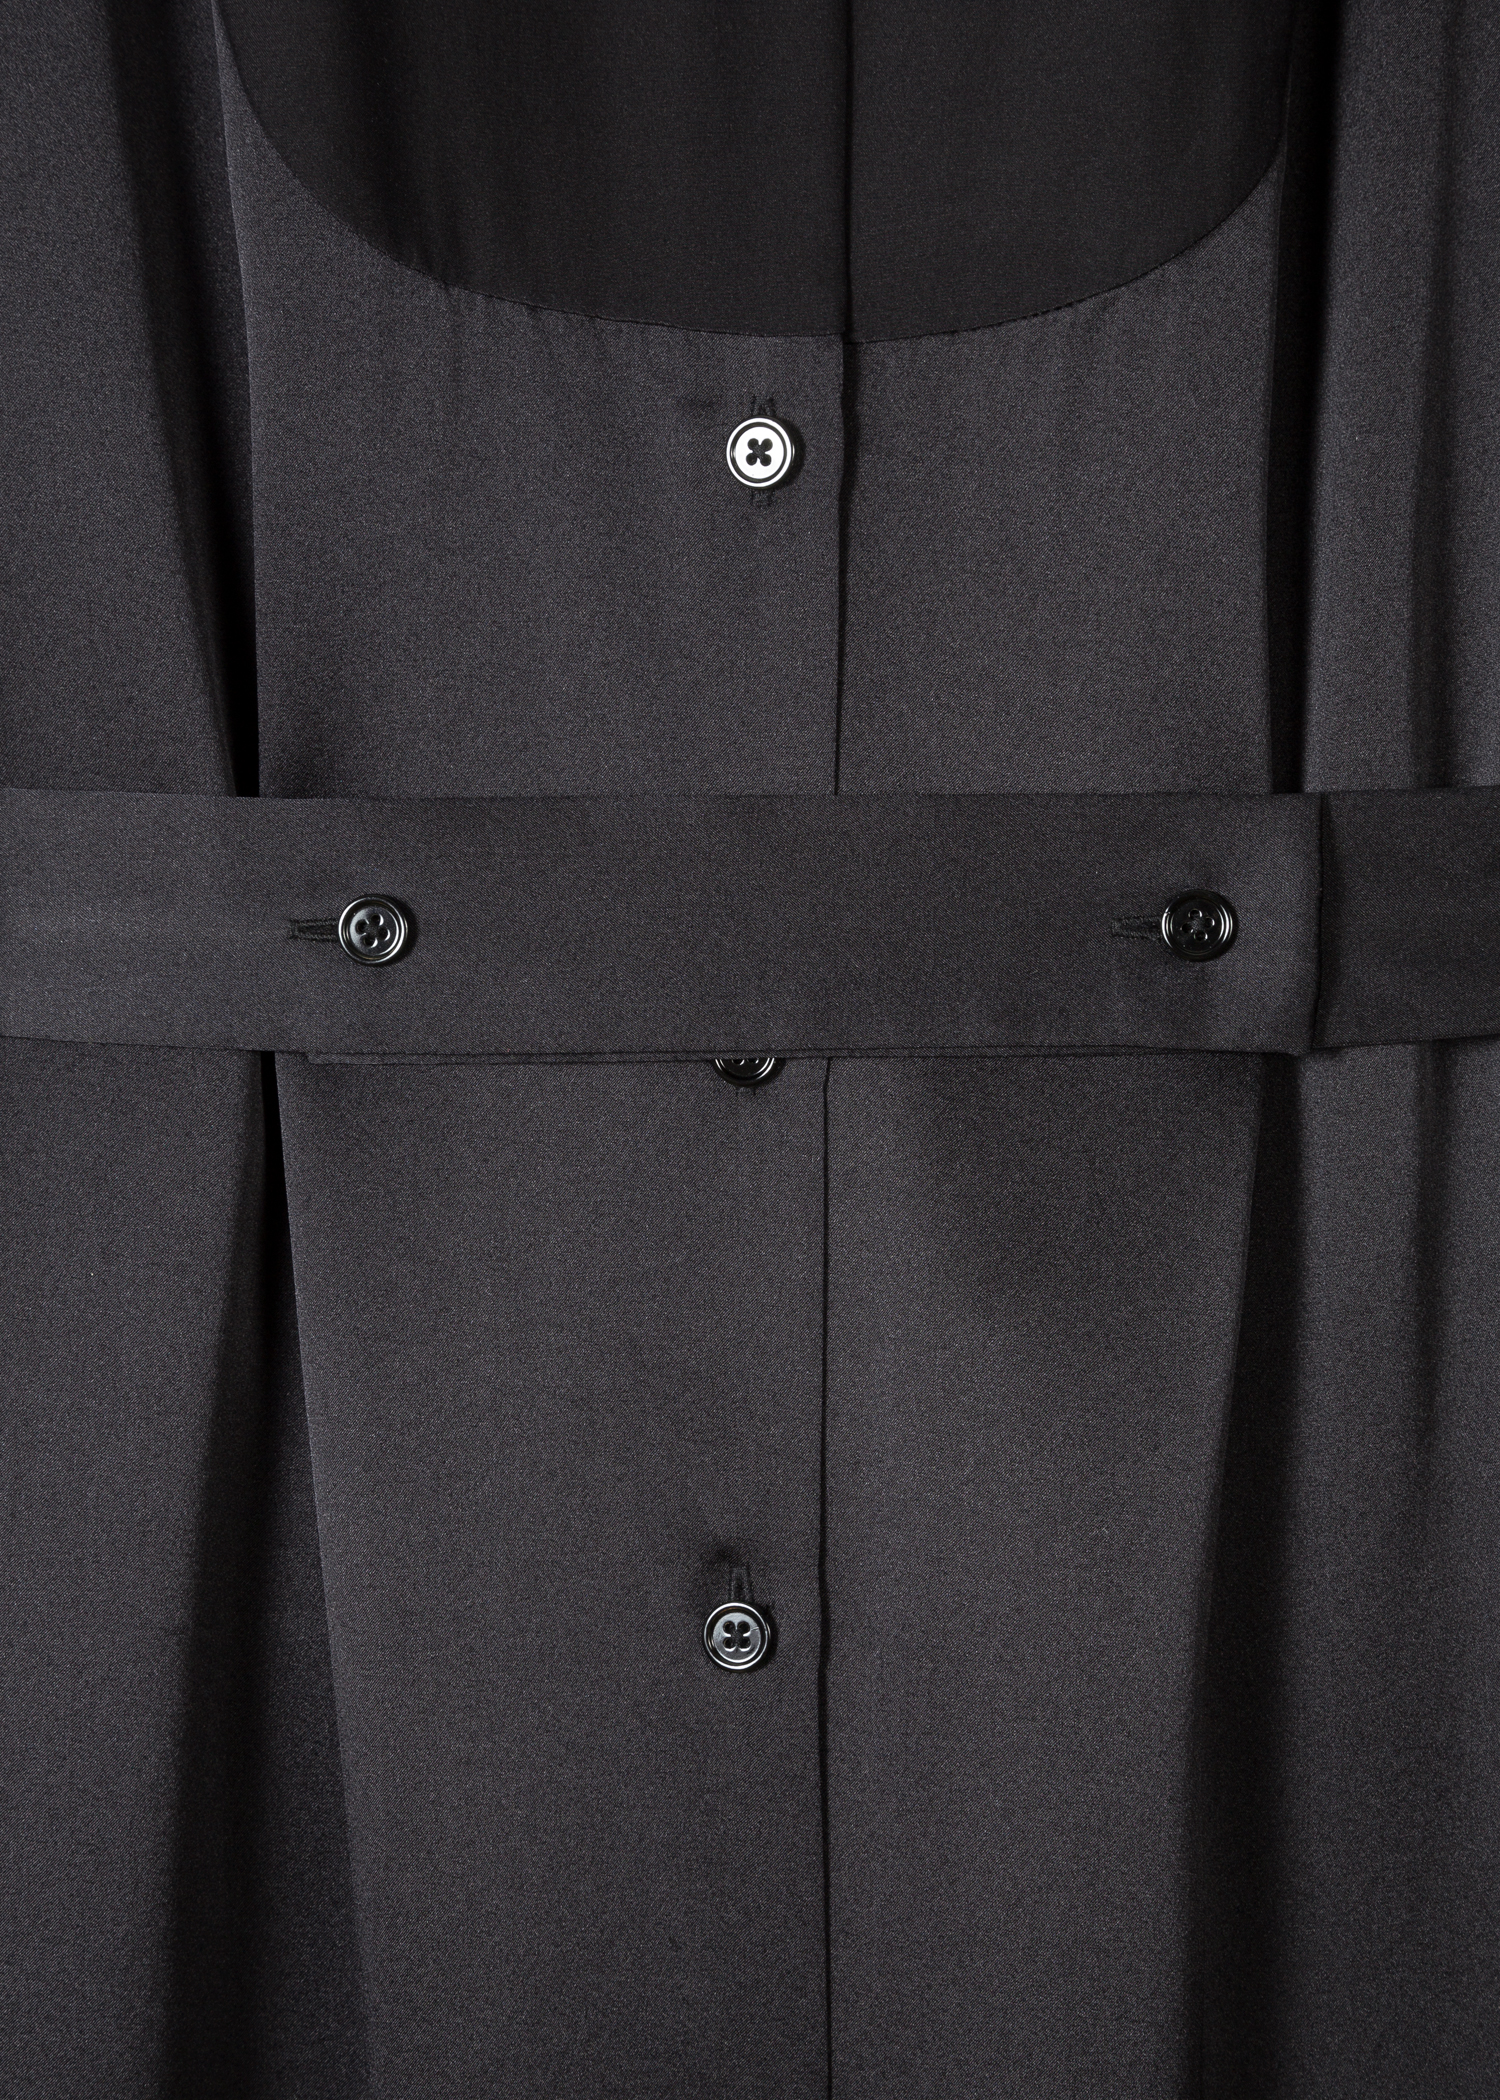 Belt view - Women's Black Tuxedo Satin Silk Shirt Dress With Bib And Belt Detail Paul Smith